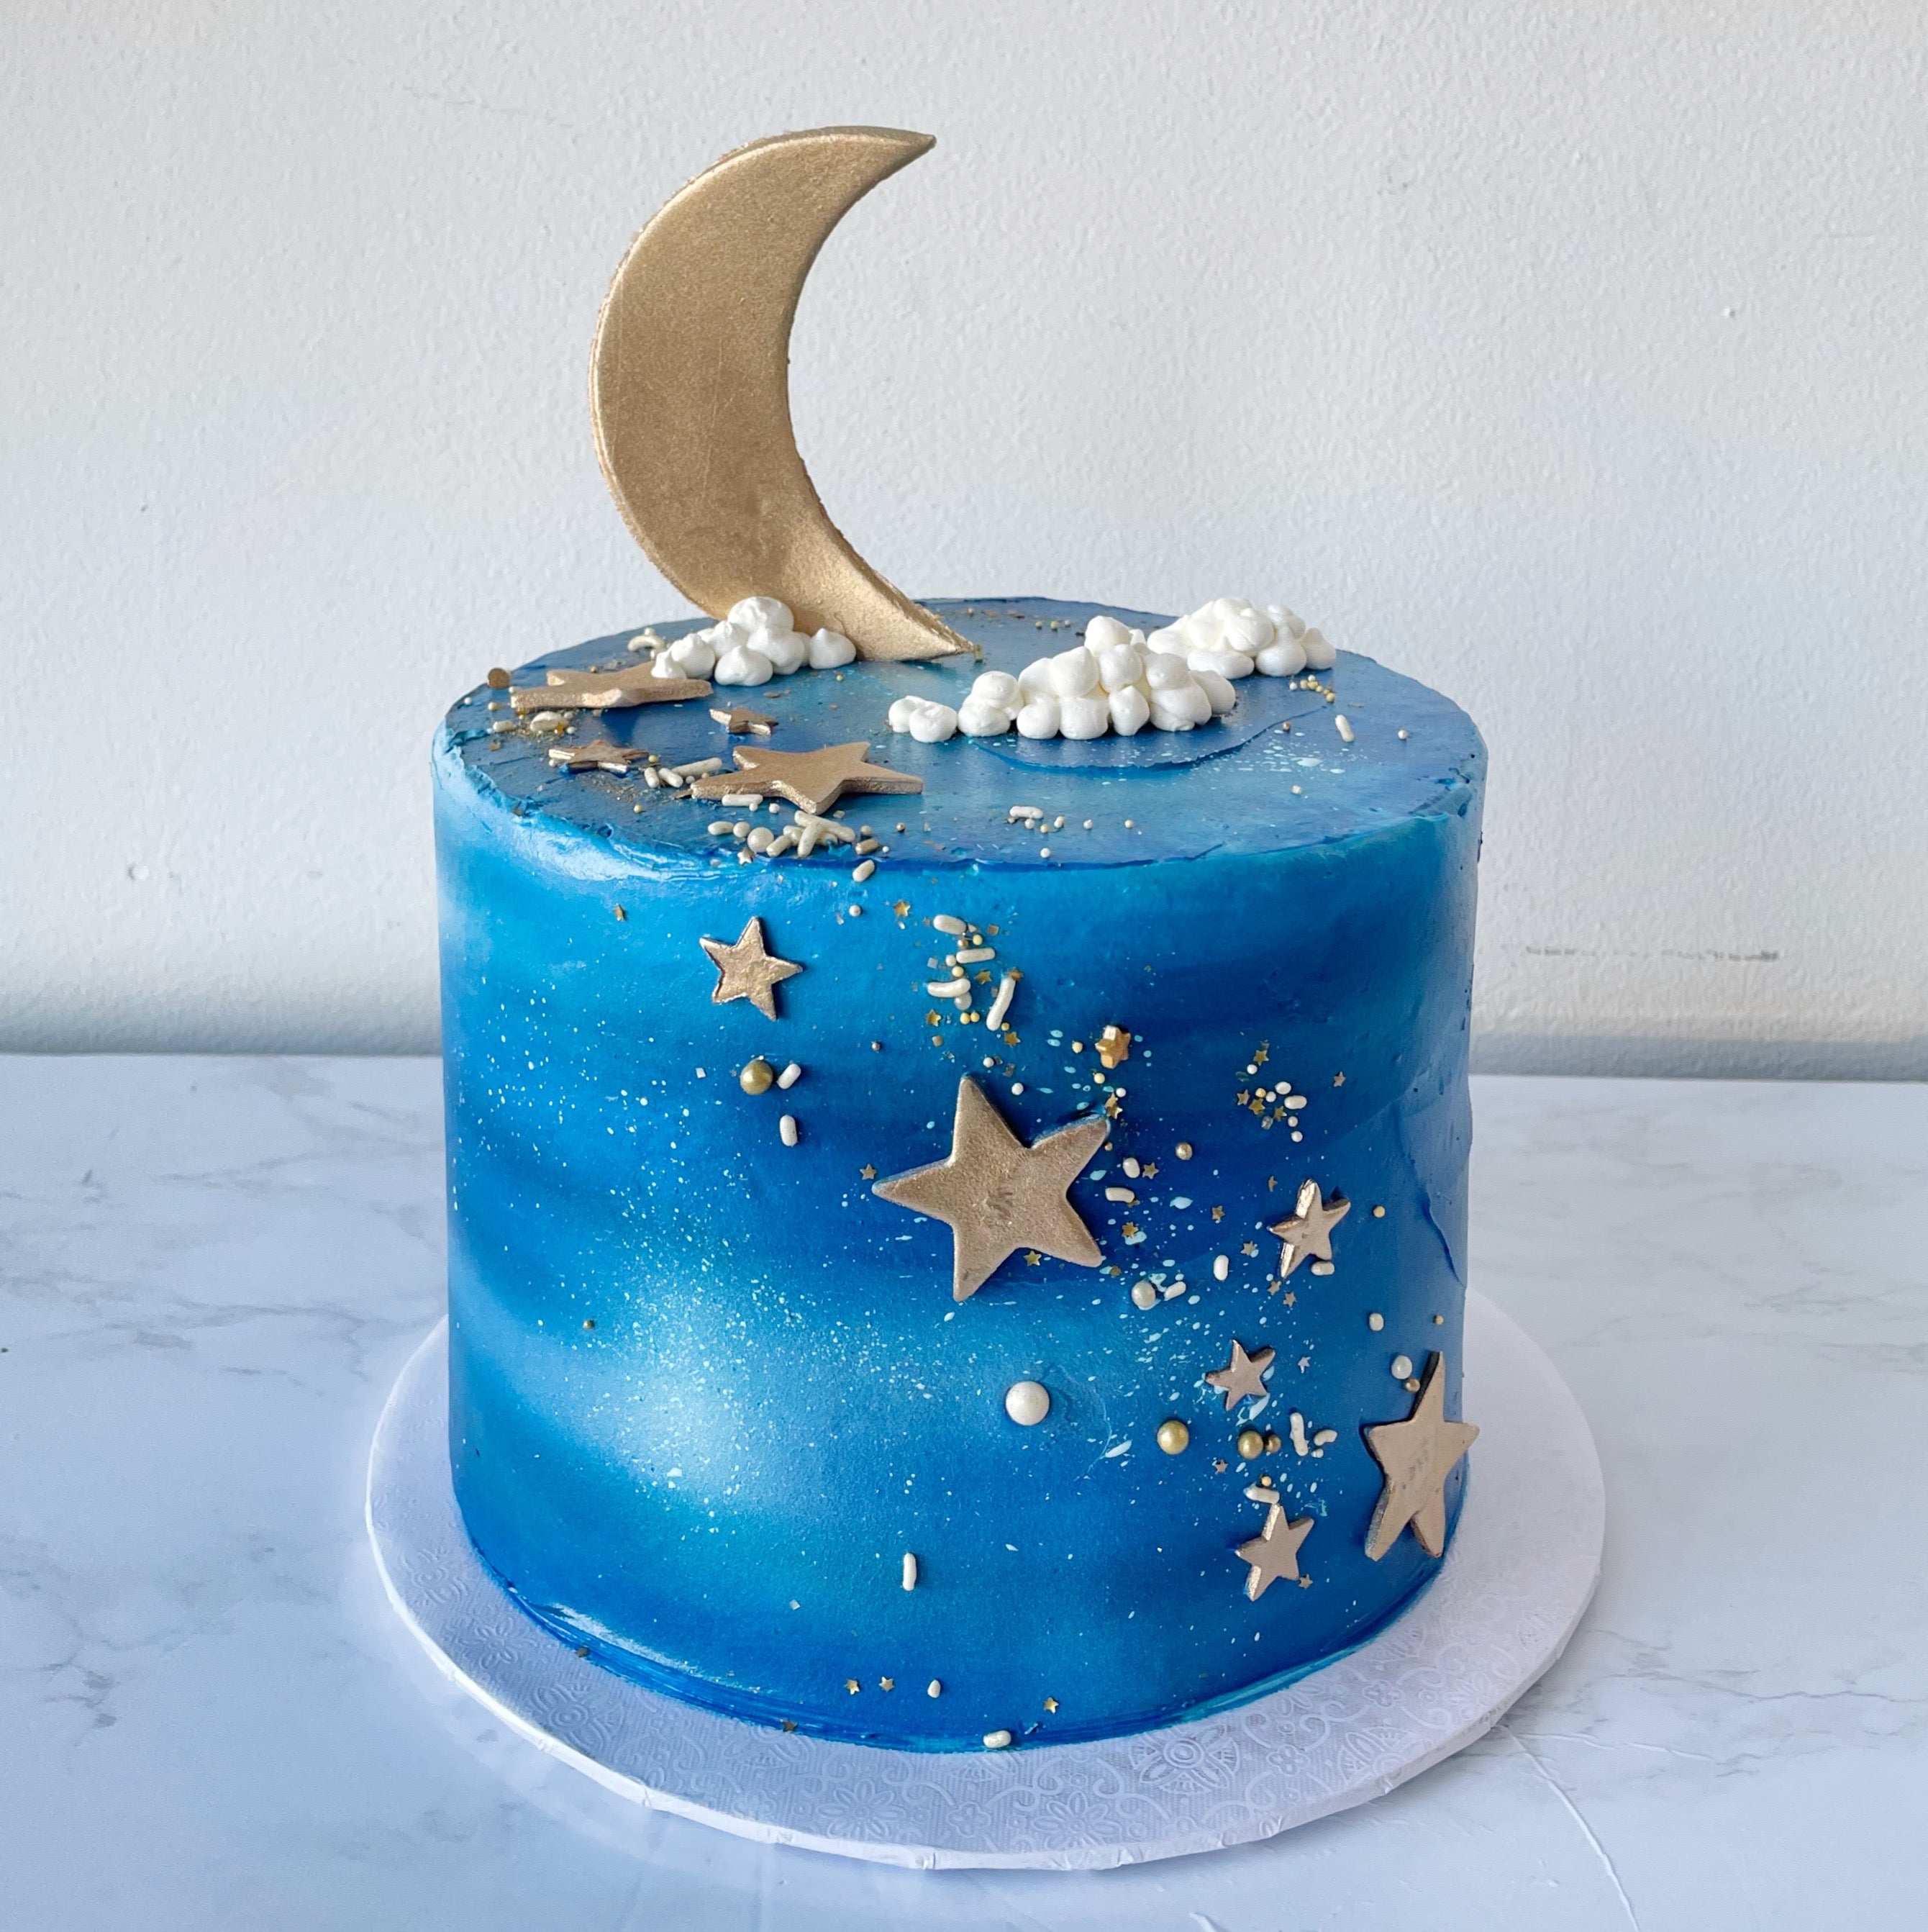 Super Mario Galaxy Birthday Cake by 0Rosethorn0 on DeviantArt